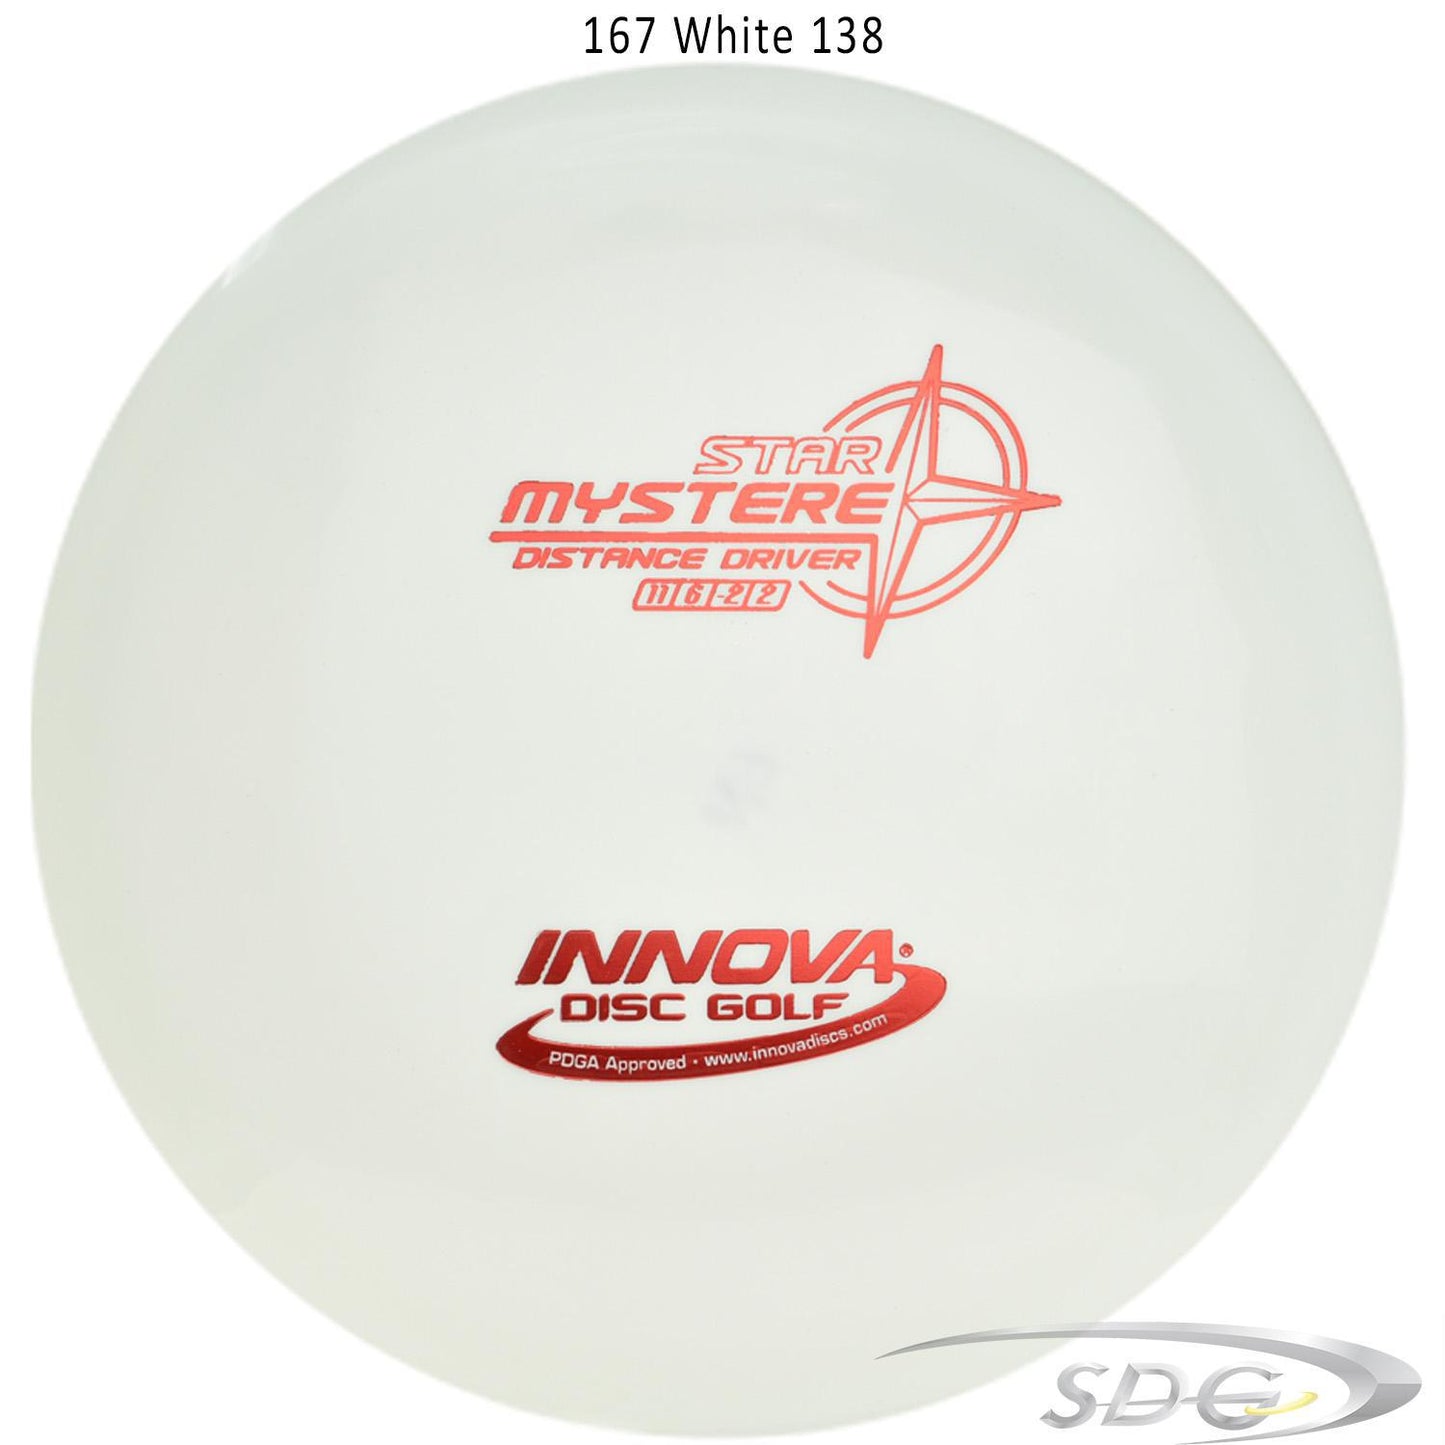 innova-star-mystere-disc-golf-distance-driver 167 White 138 